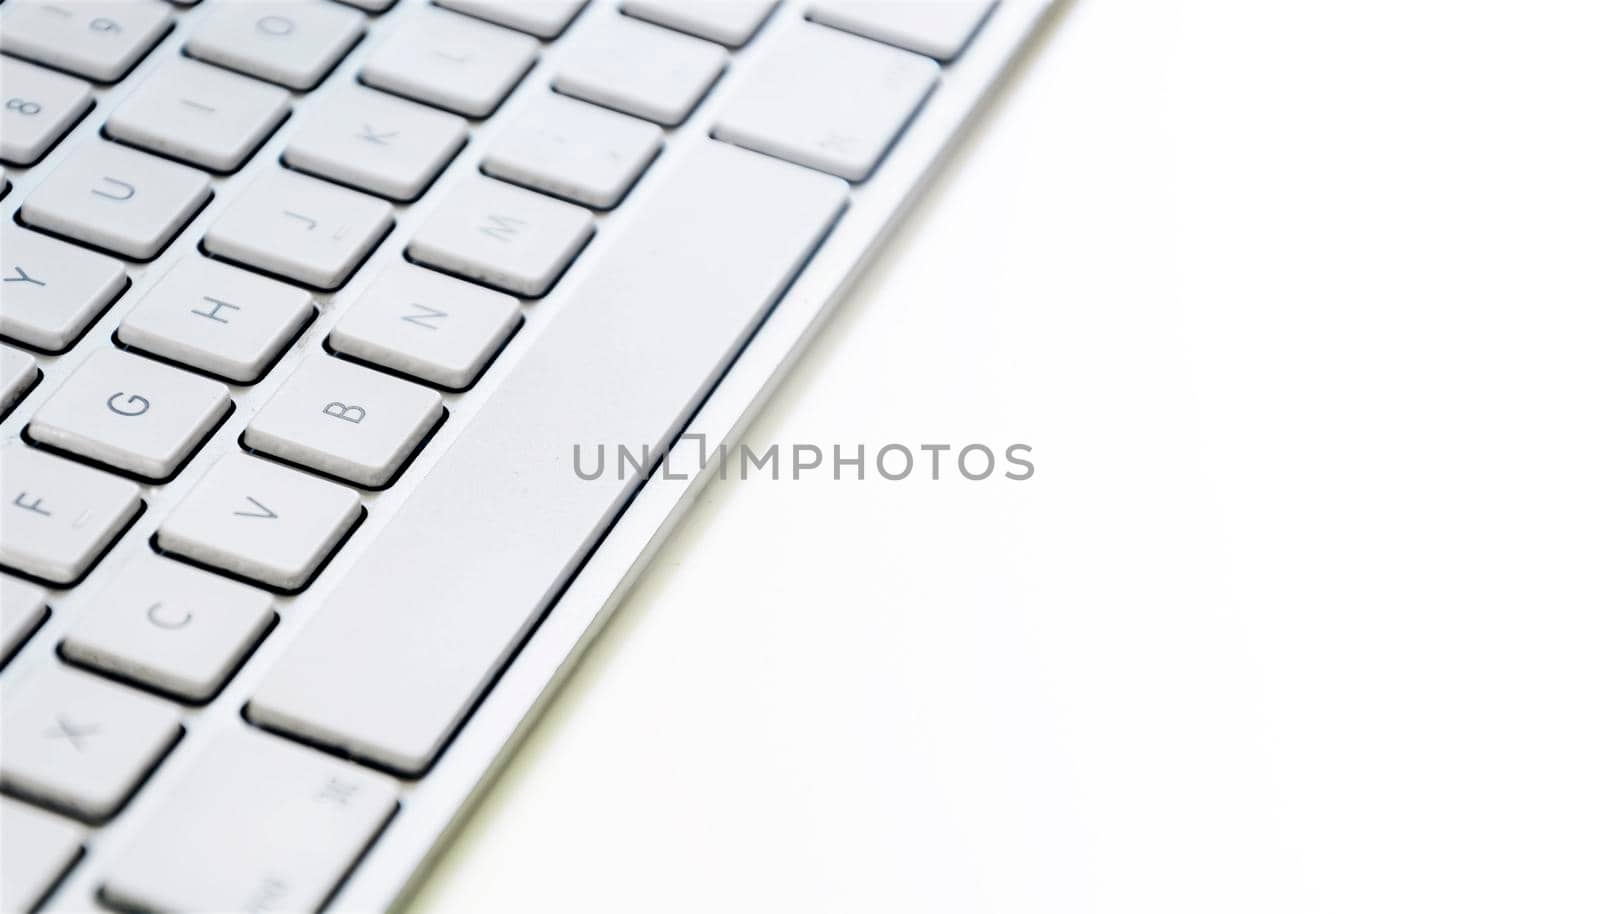 Modern computer keyboard with white keys. by rarrarorro